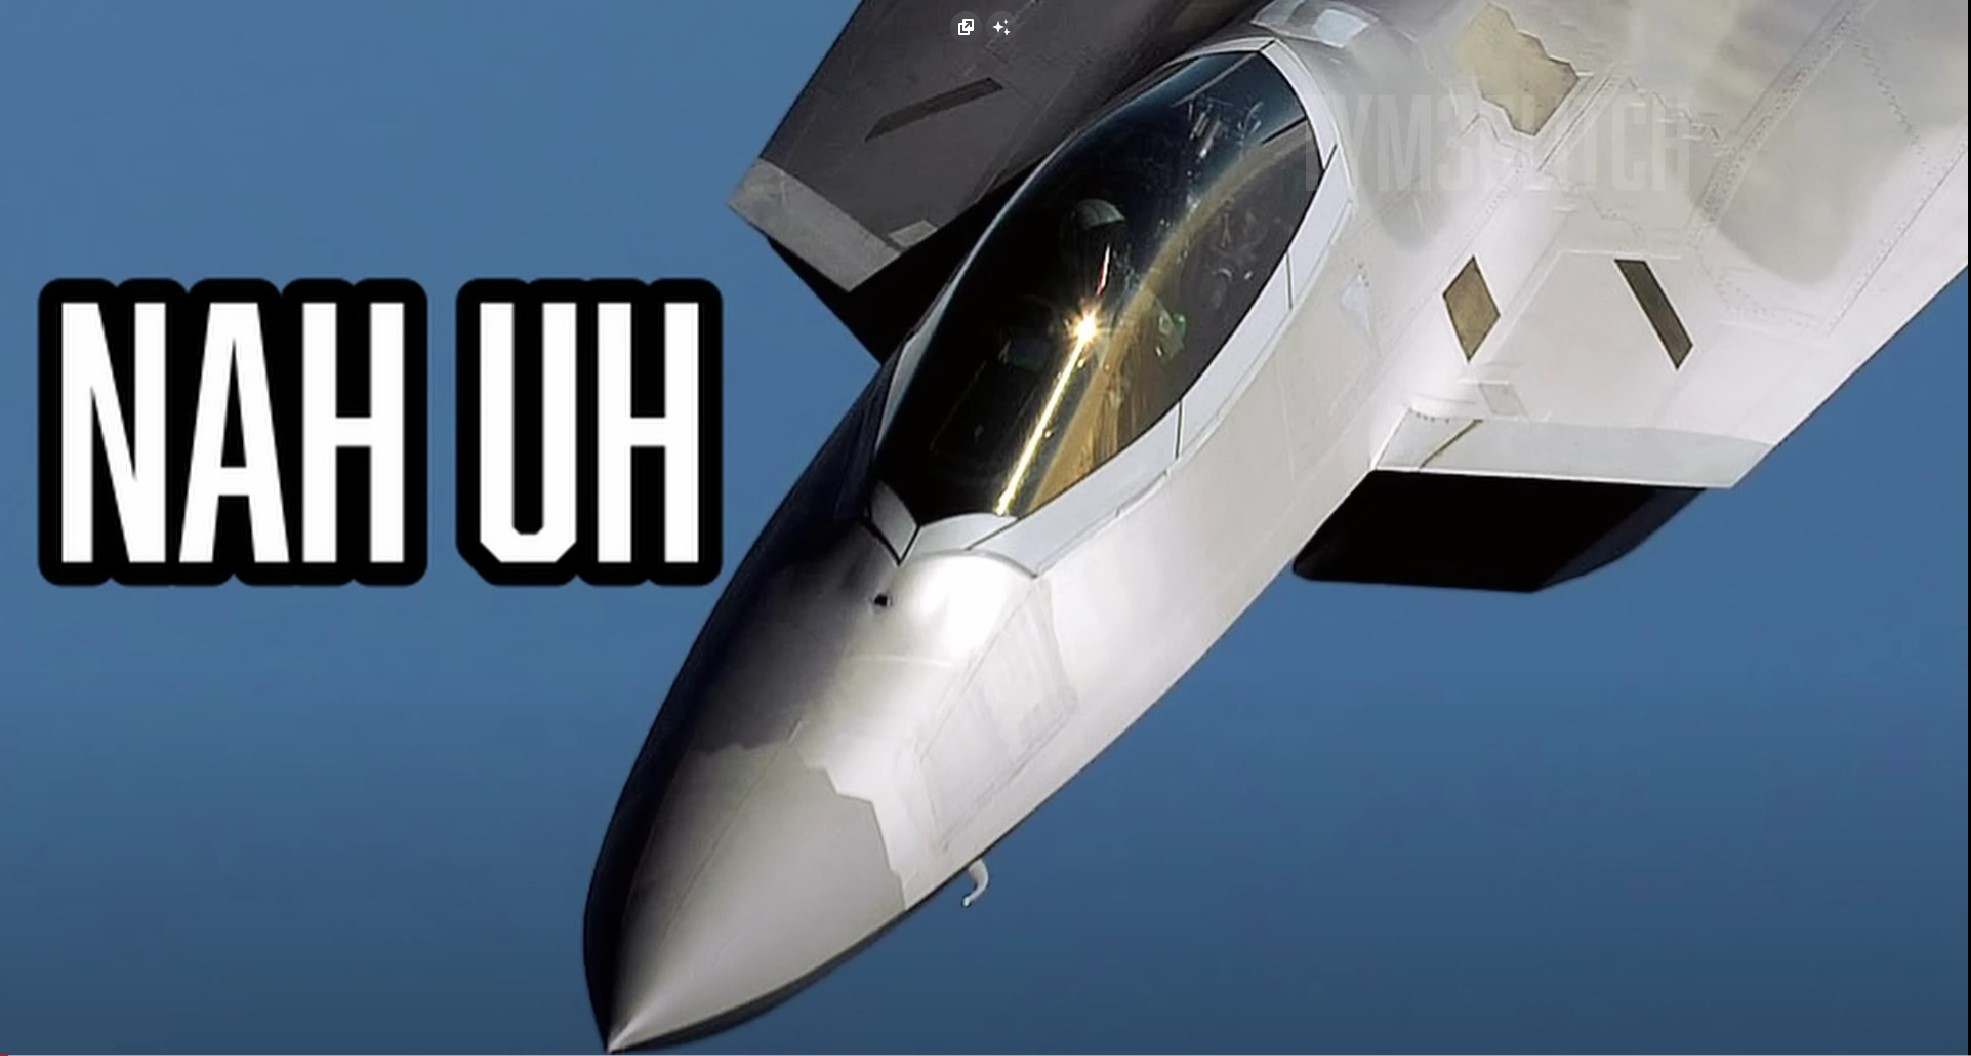 High Quality F-22 Raptor "Nah uh" Blank Meme Template